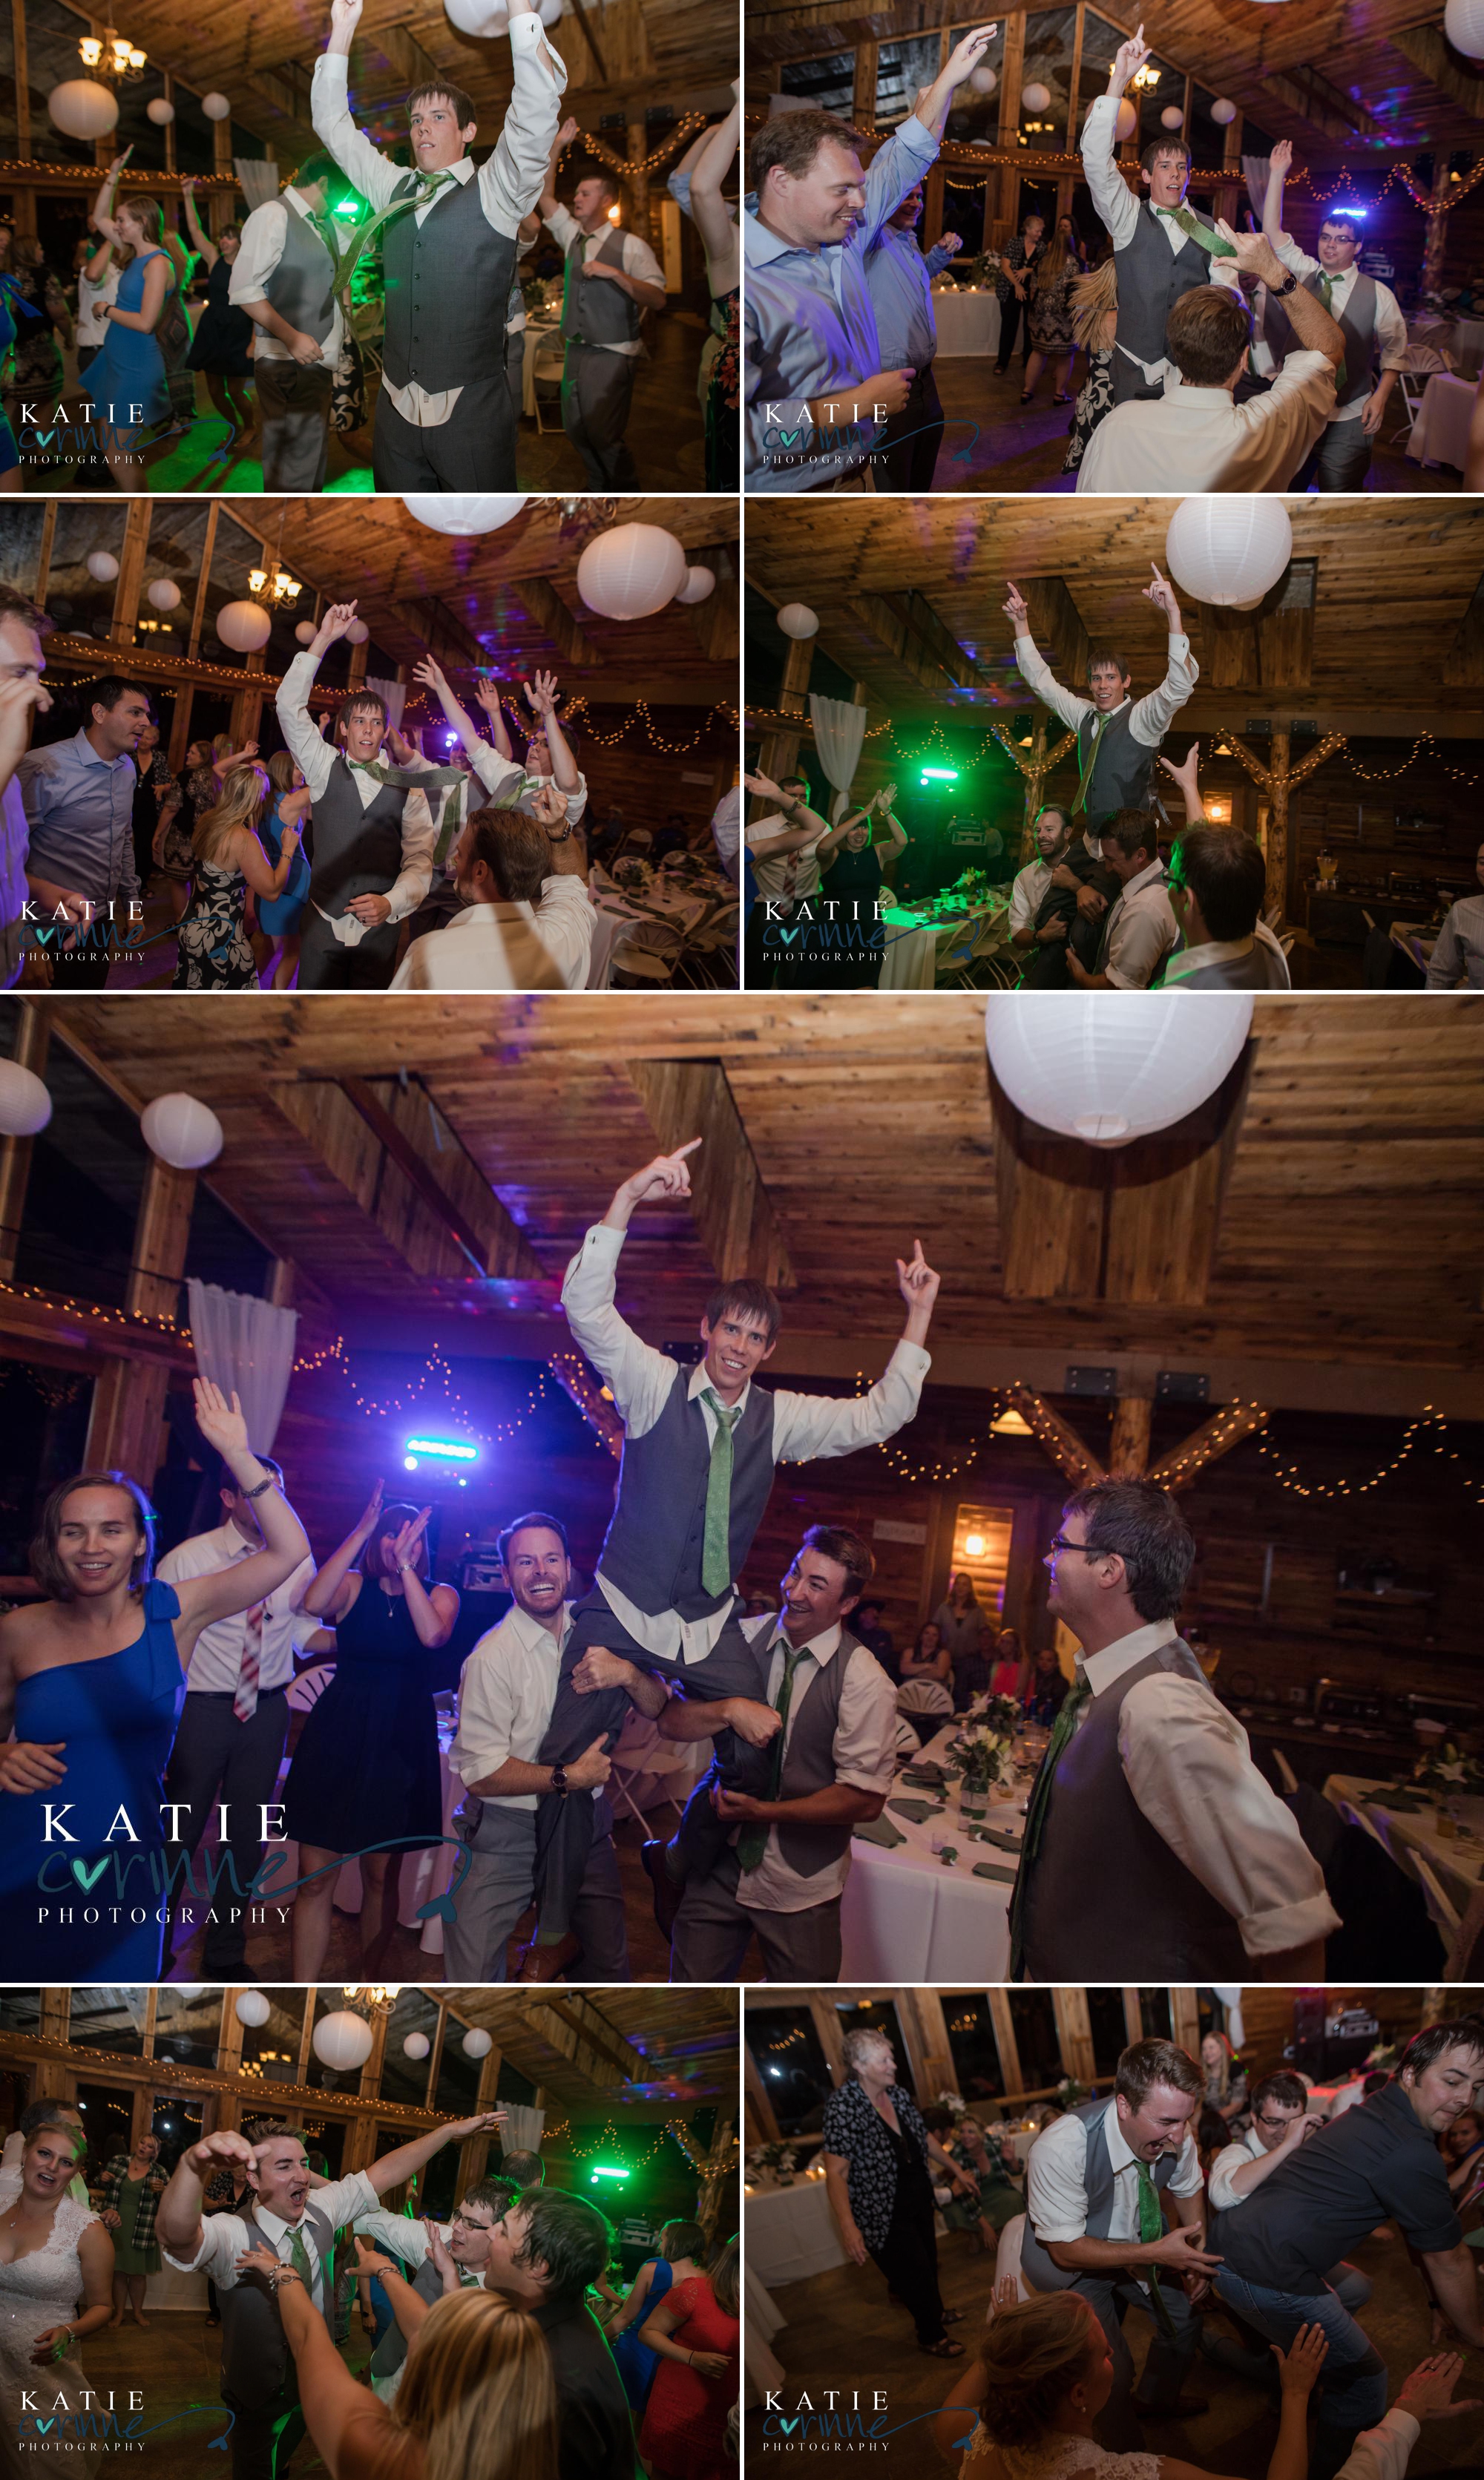 Fun dancing photos at wedding reception 